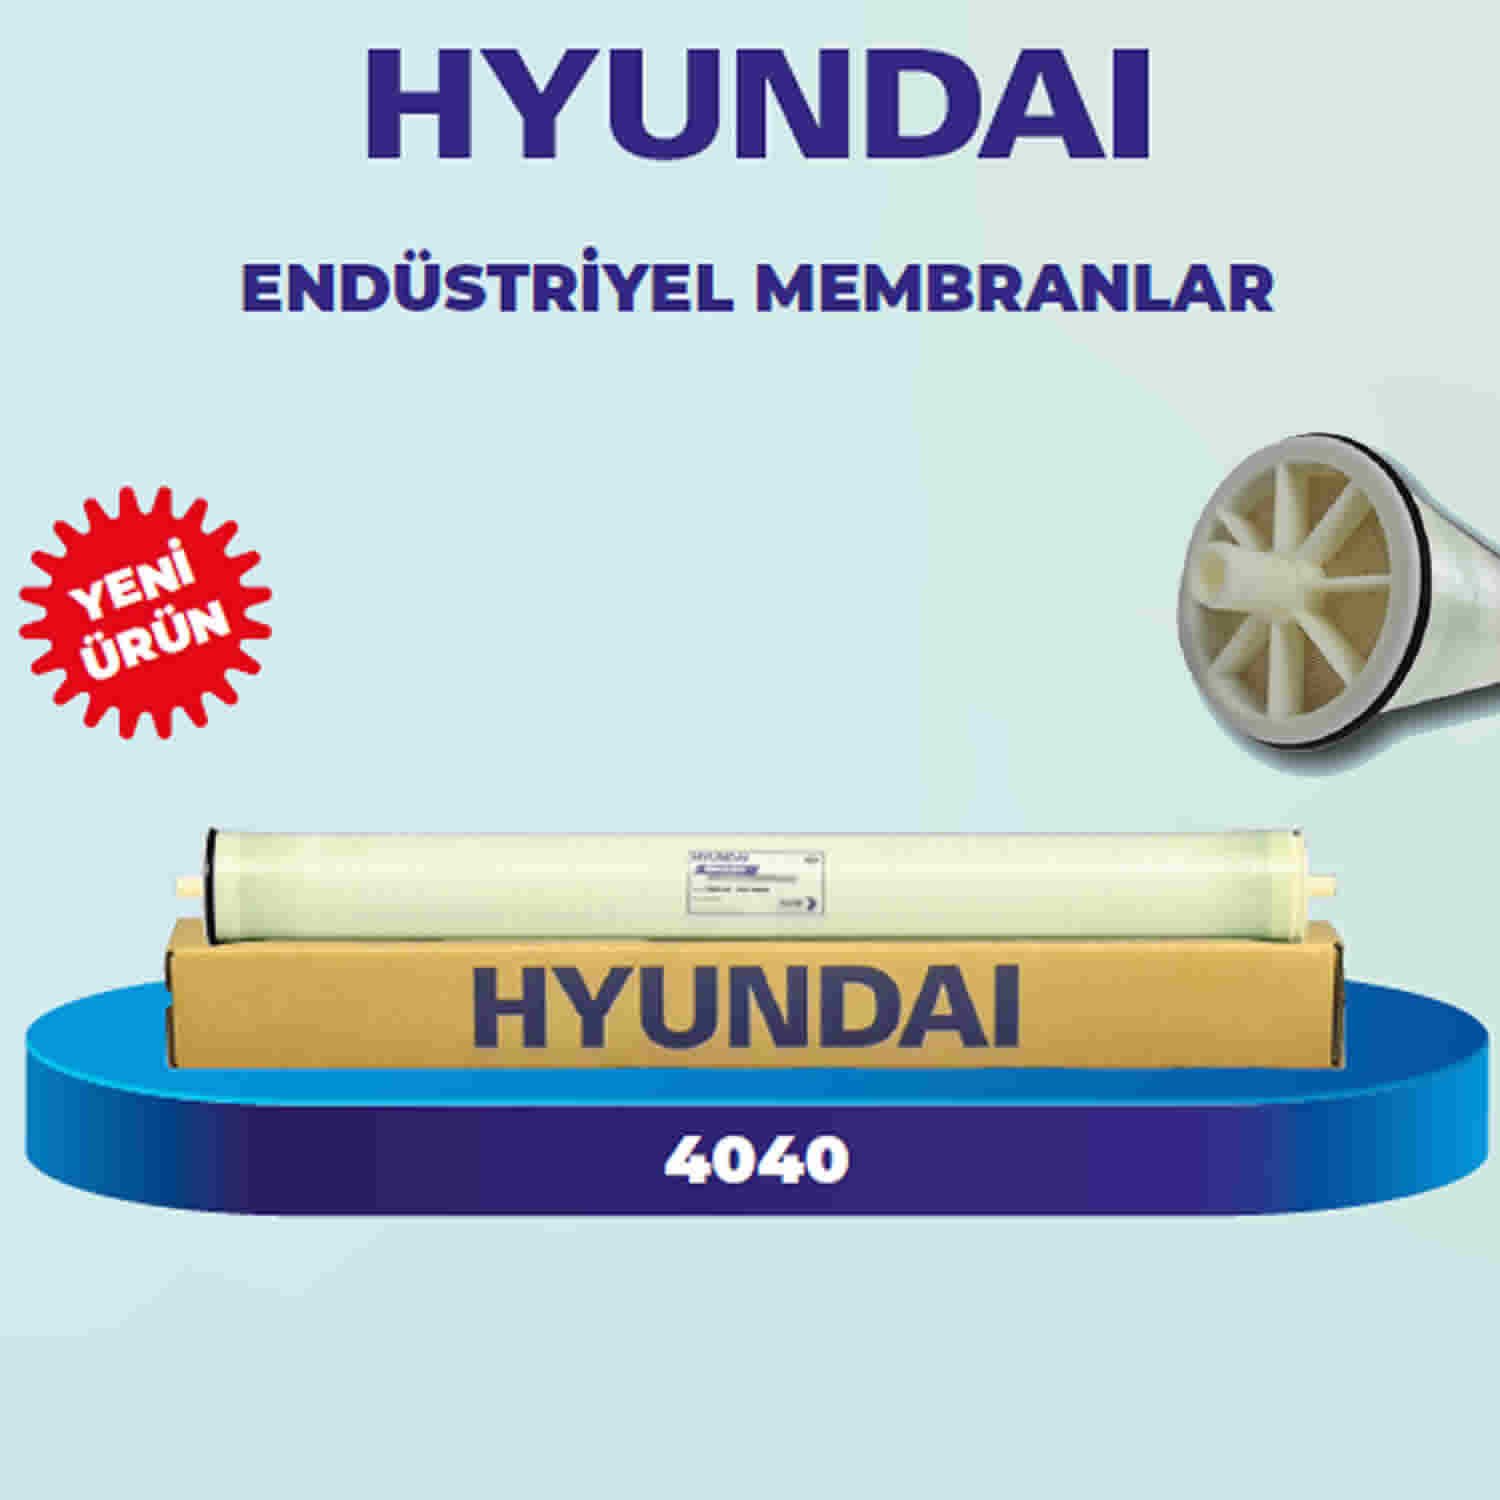 HYUNDAI 4040 Endüstriyel Membrane